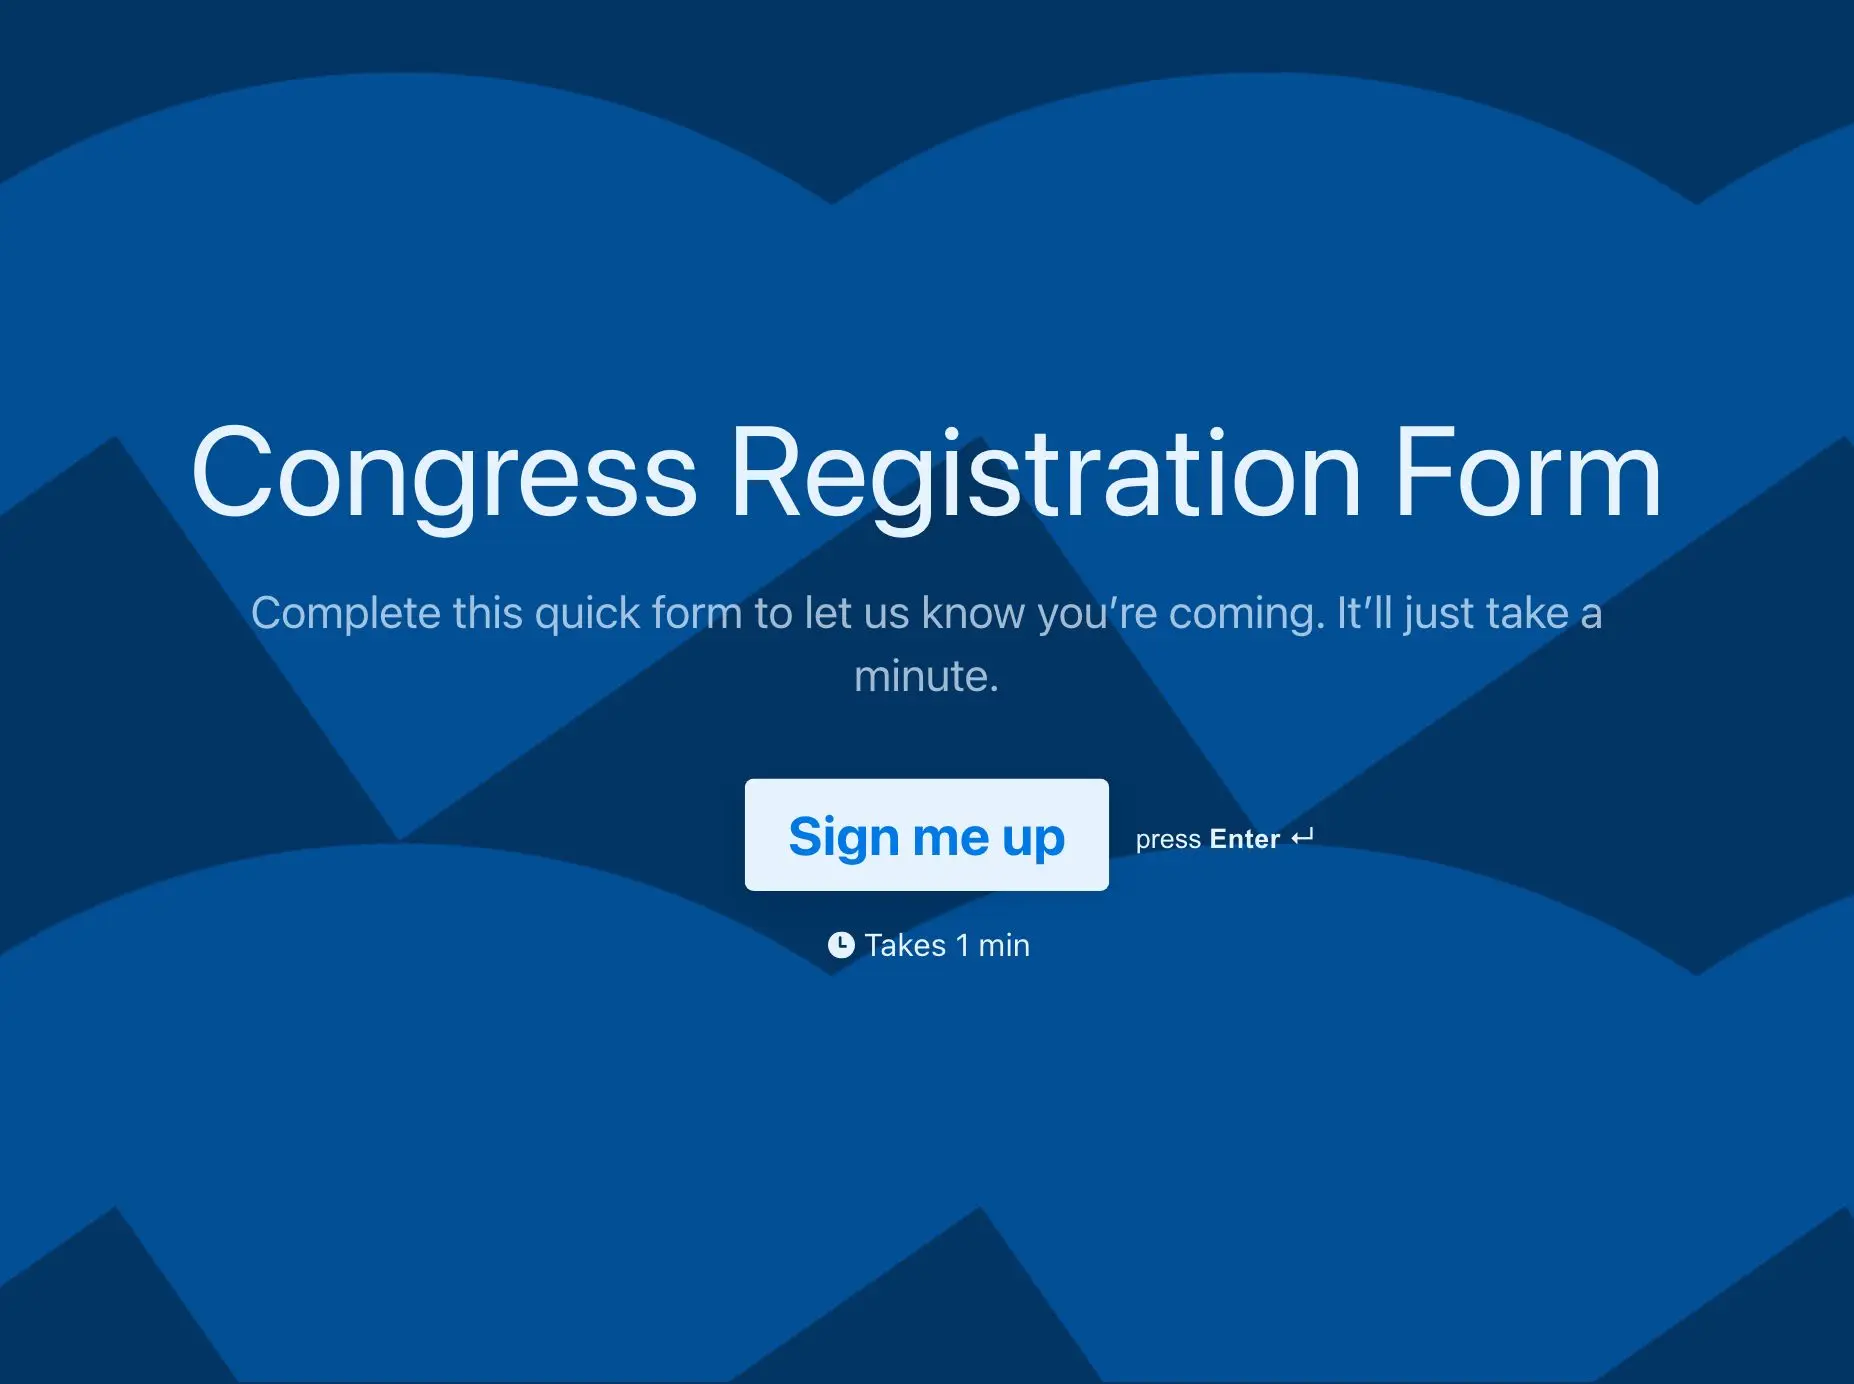 Congress Registration Form Template Hero